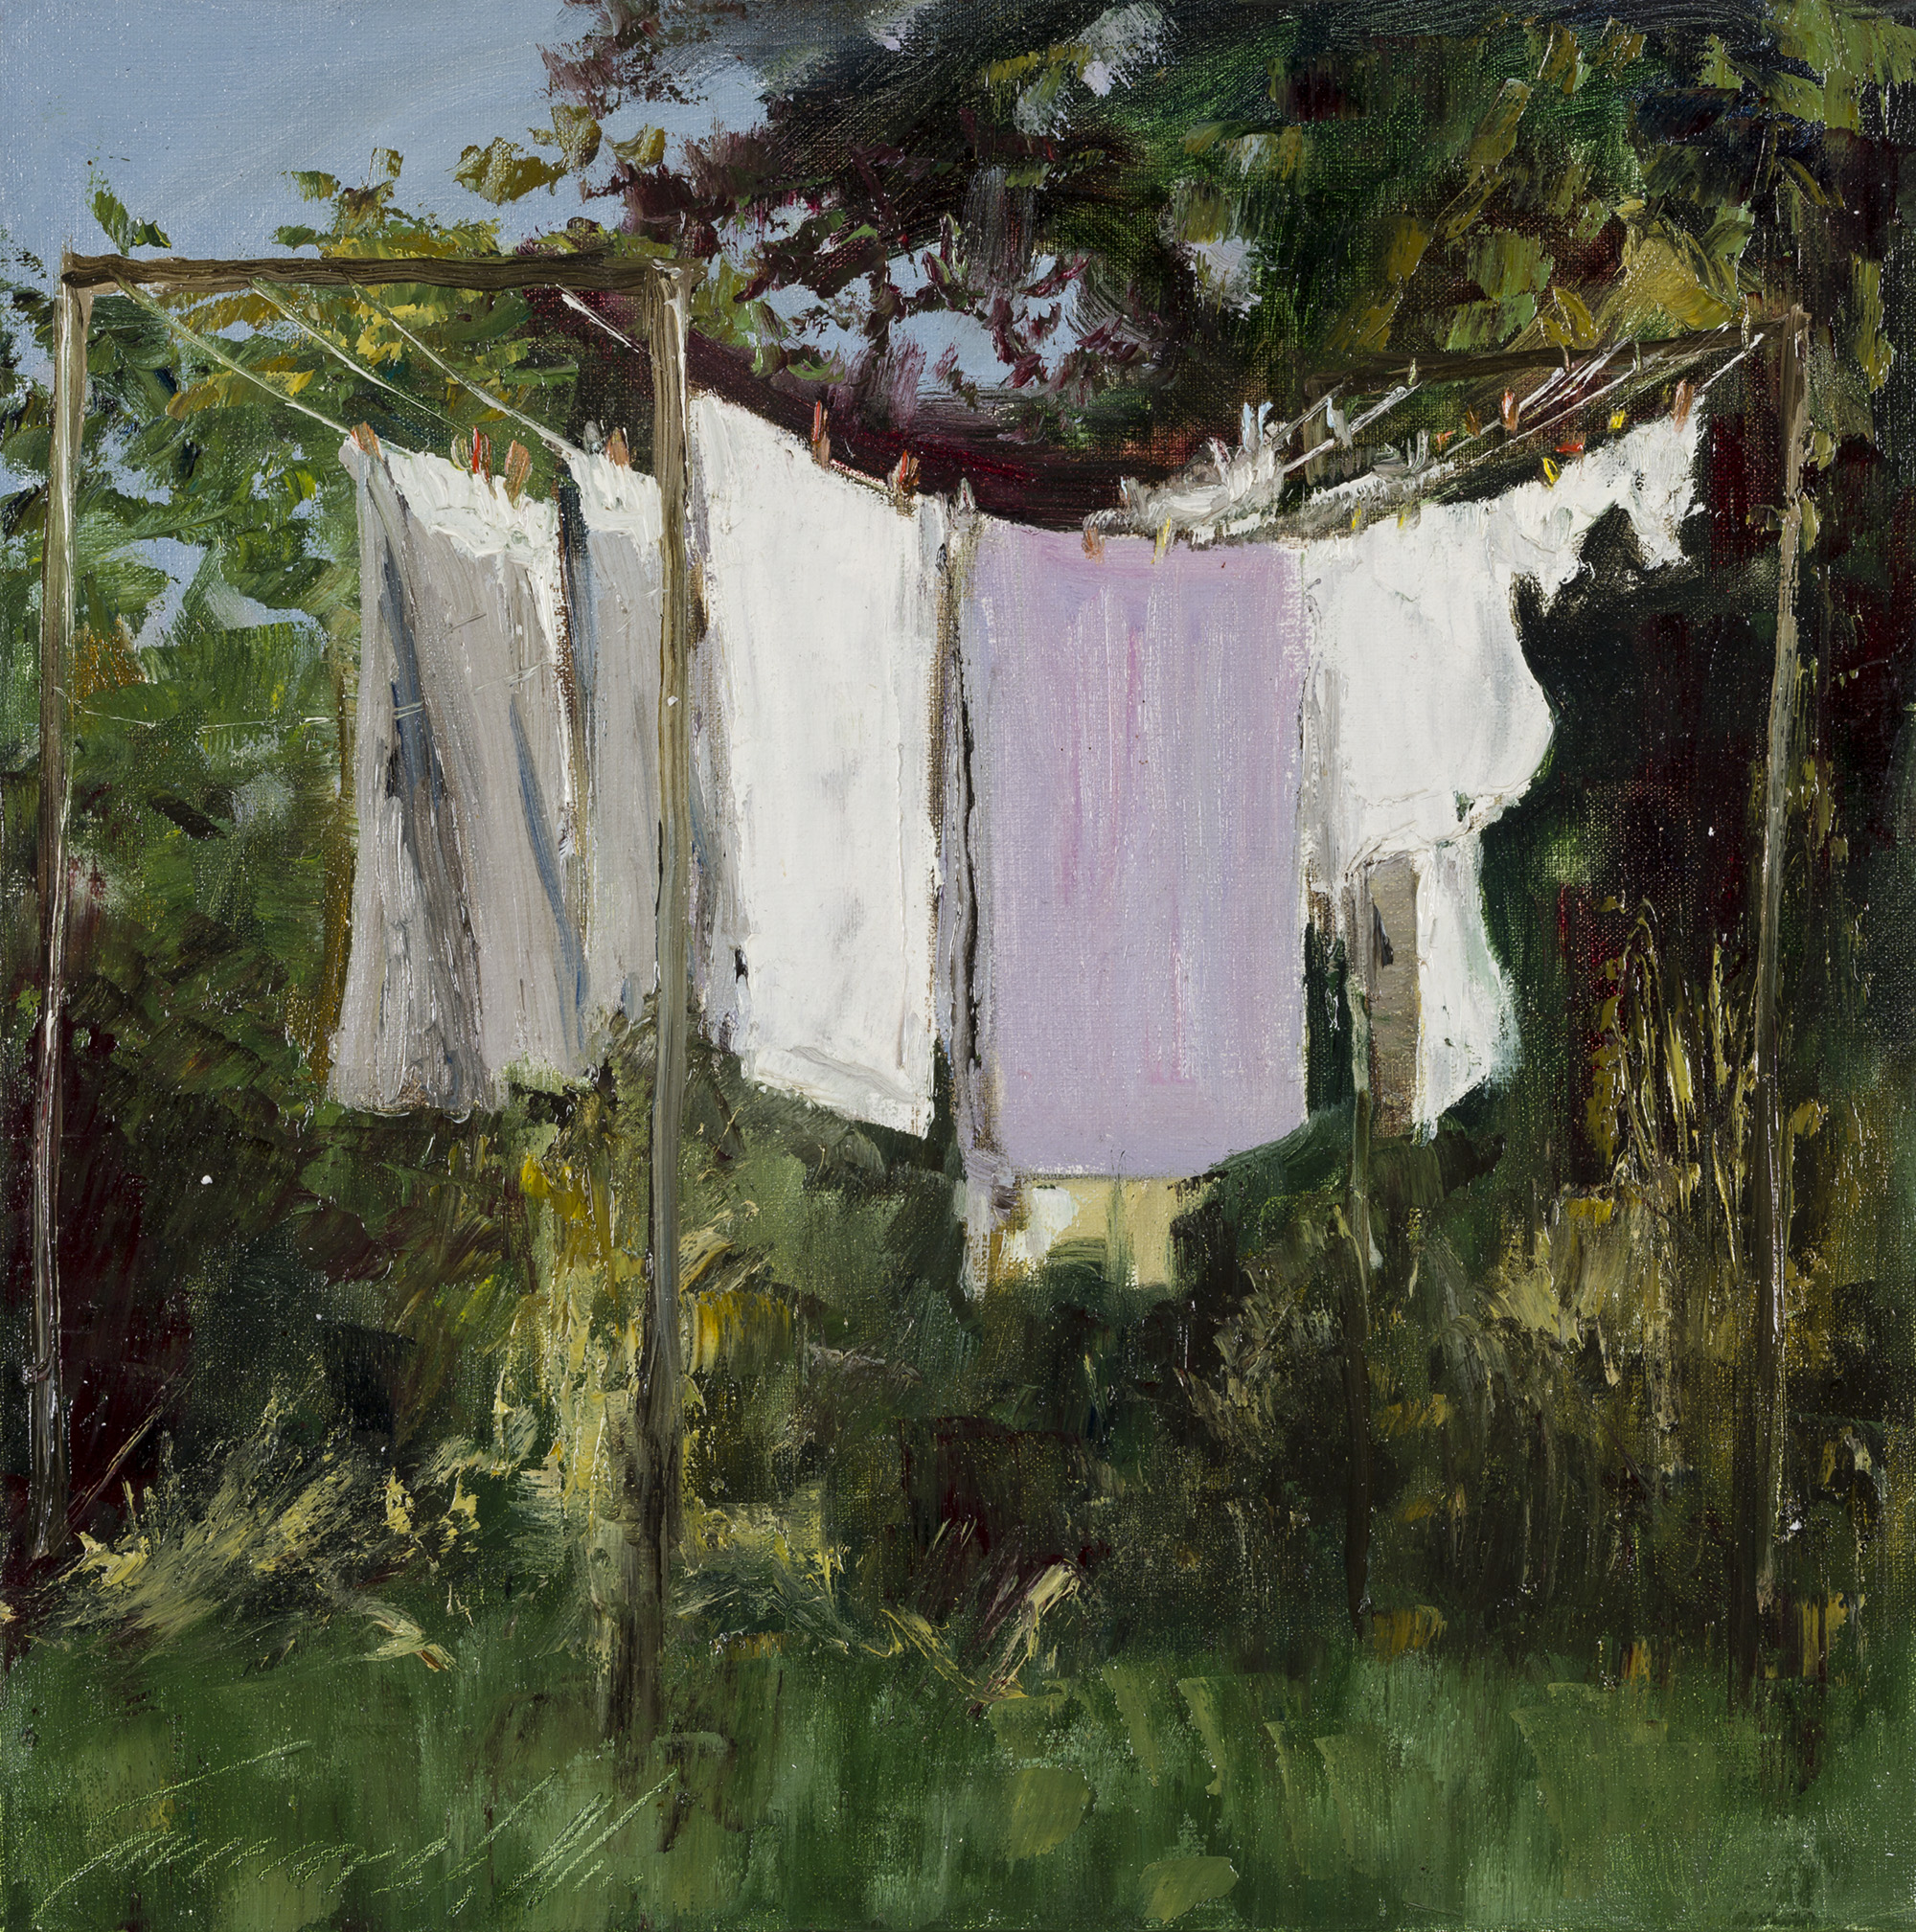 Laundry Drying